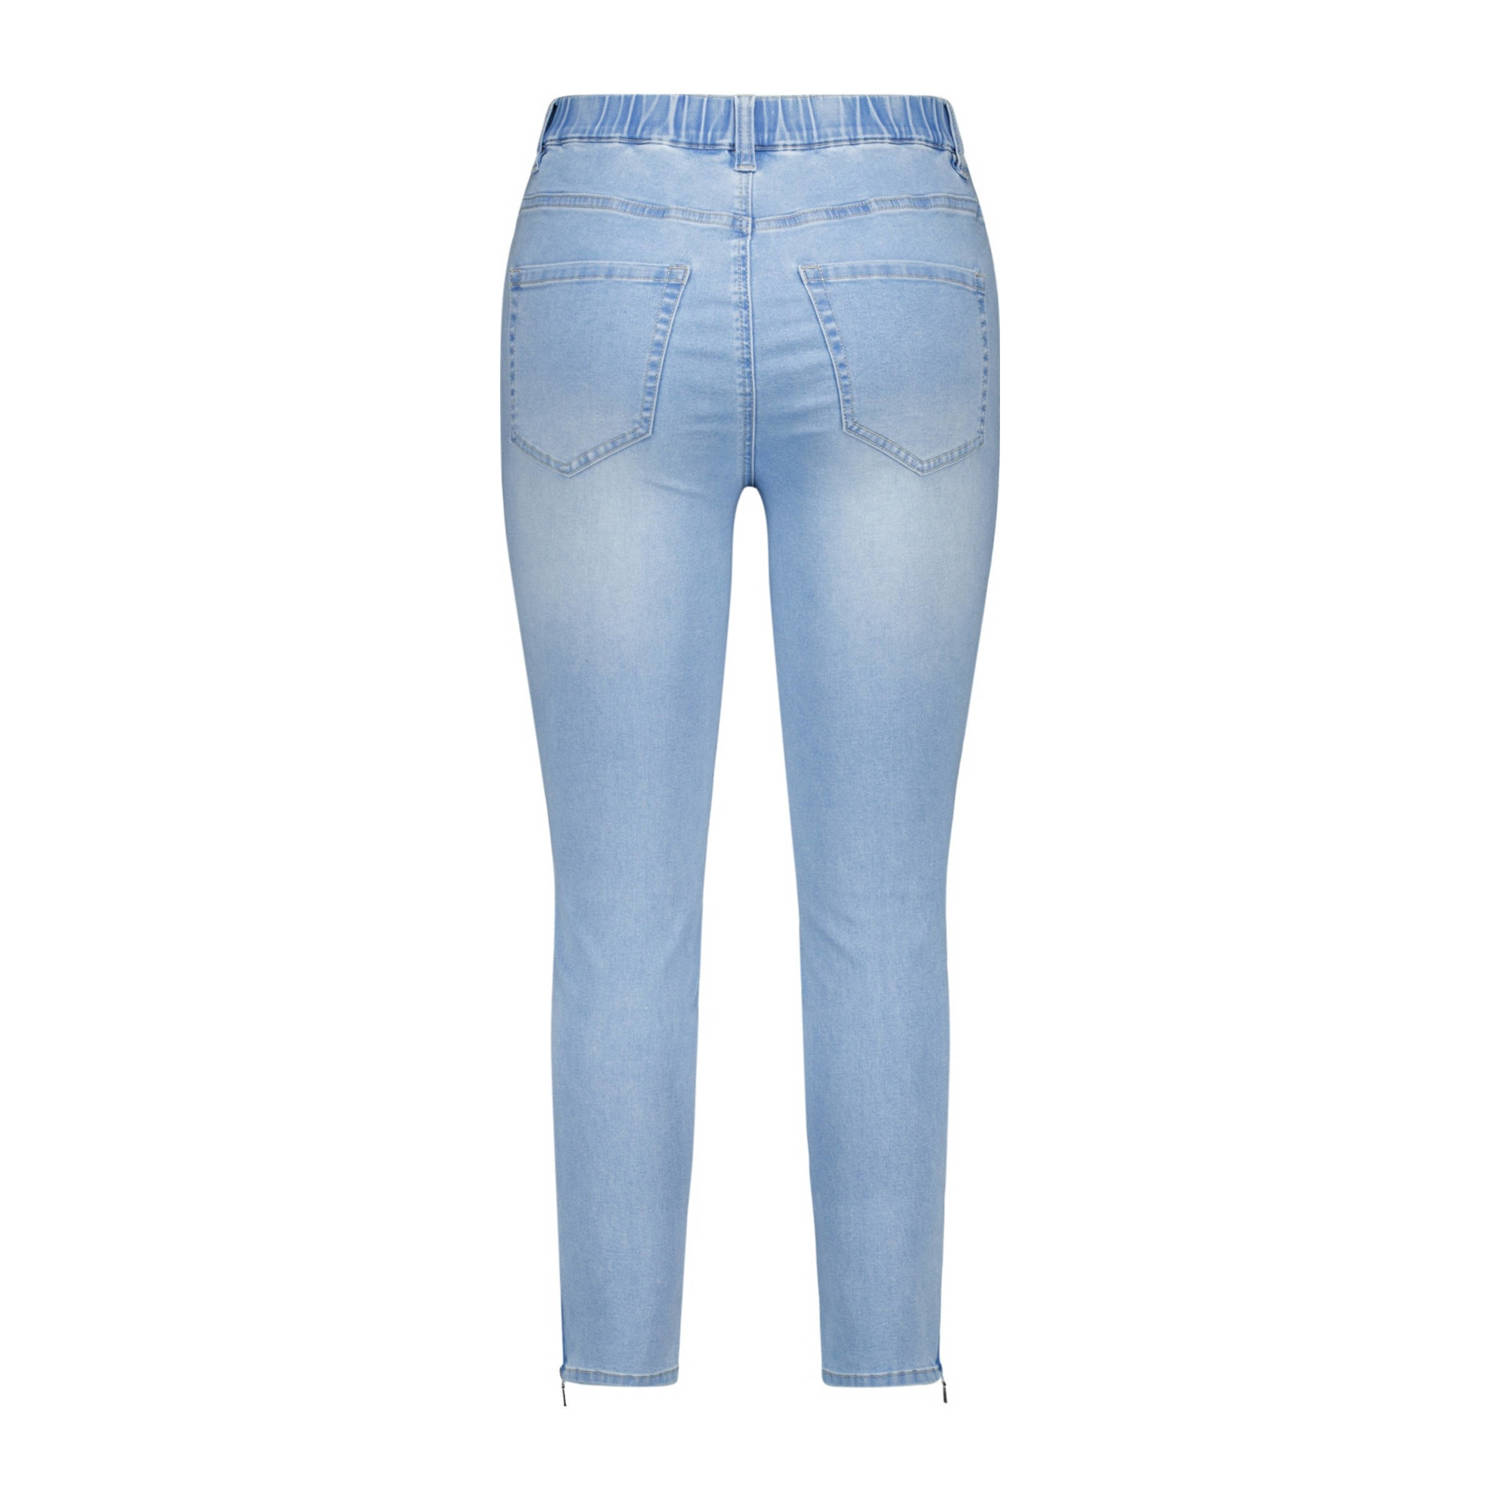 MS Mode skinny jeans light blue denim